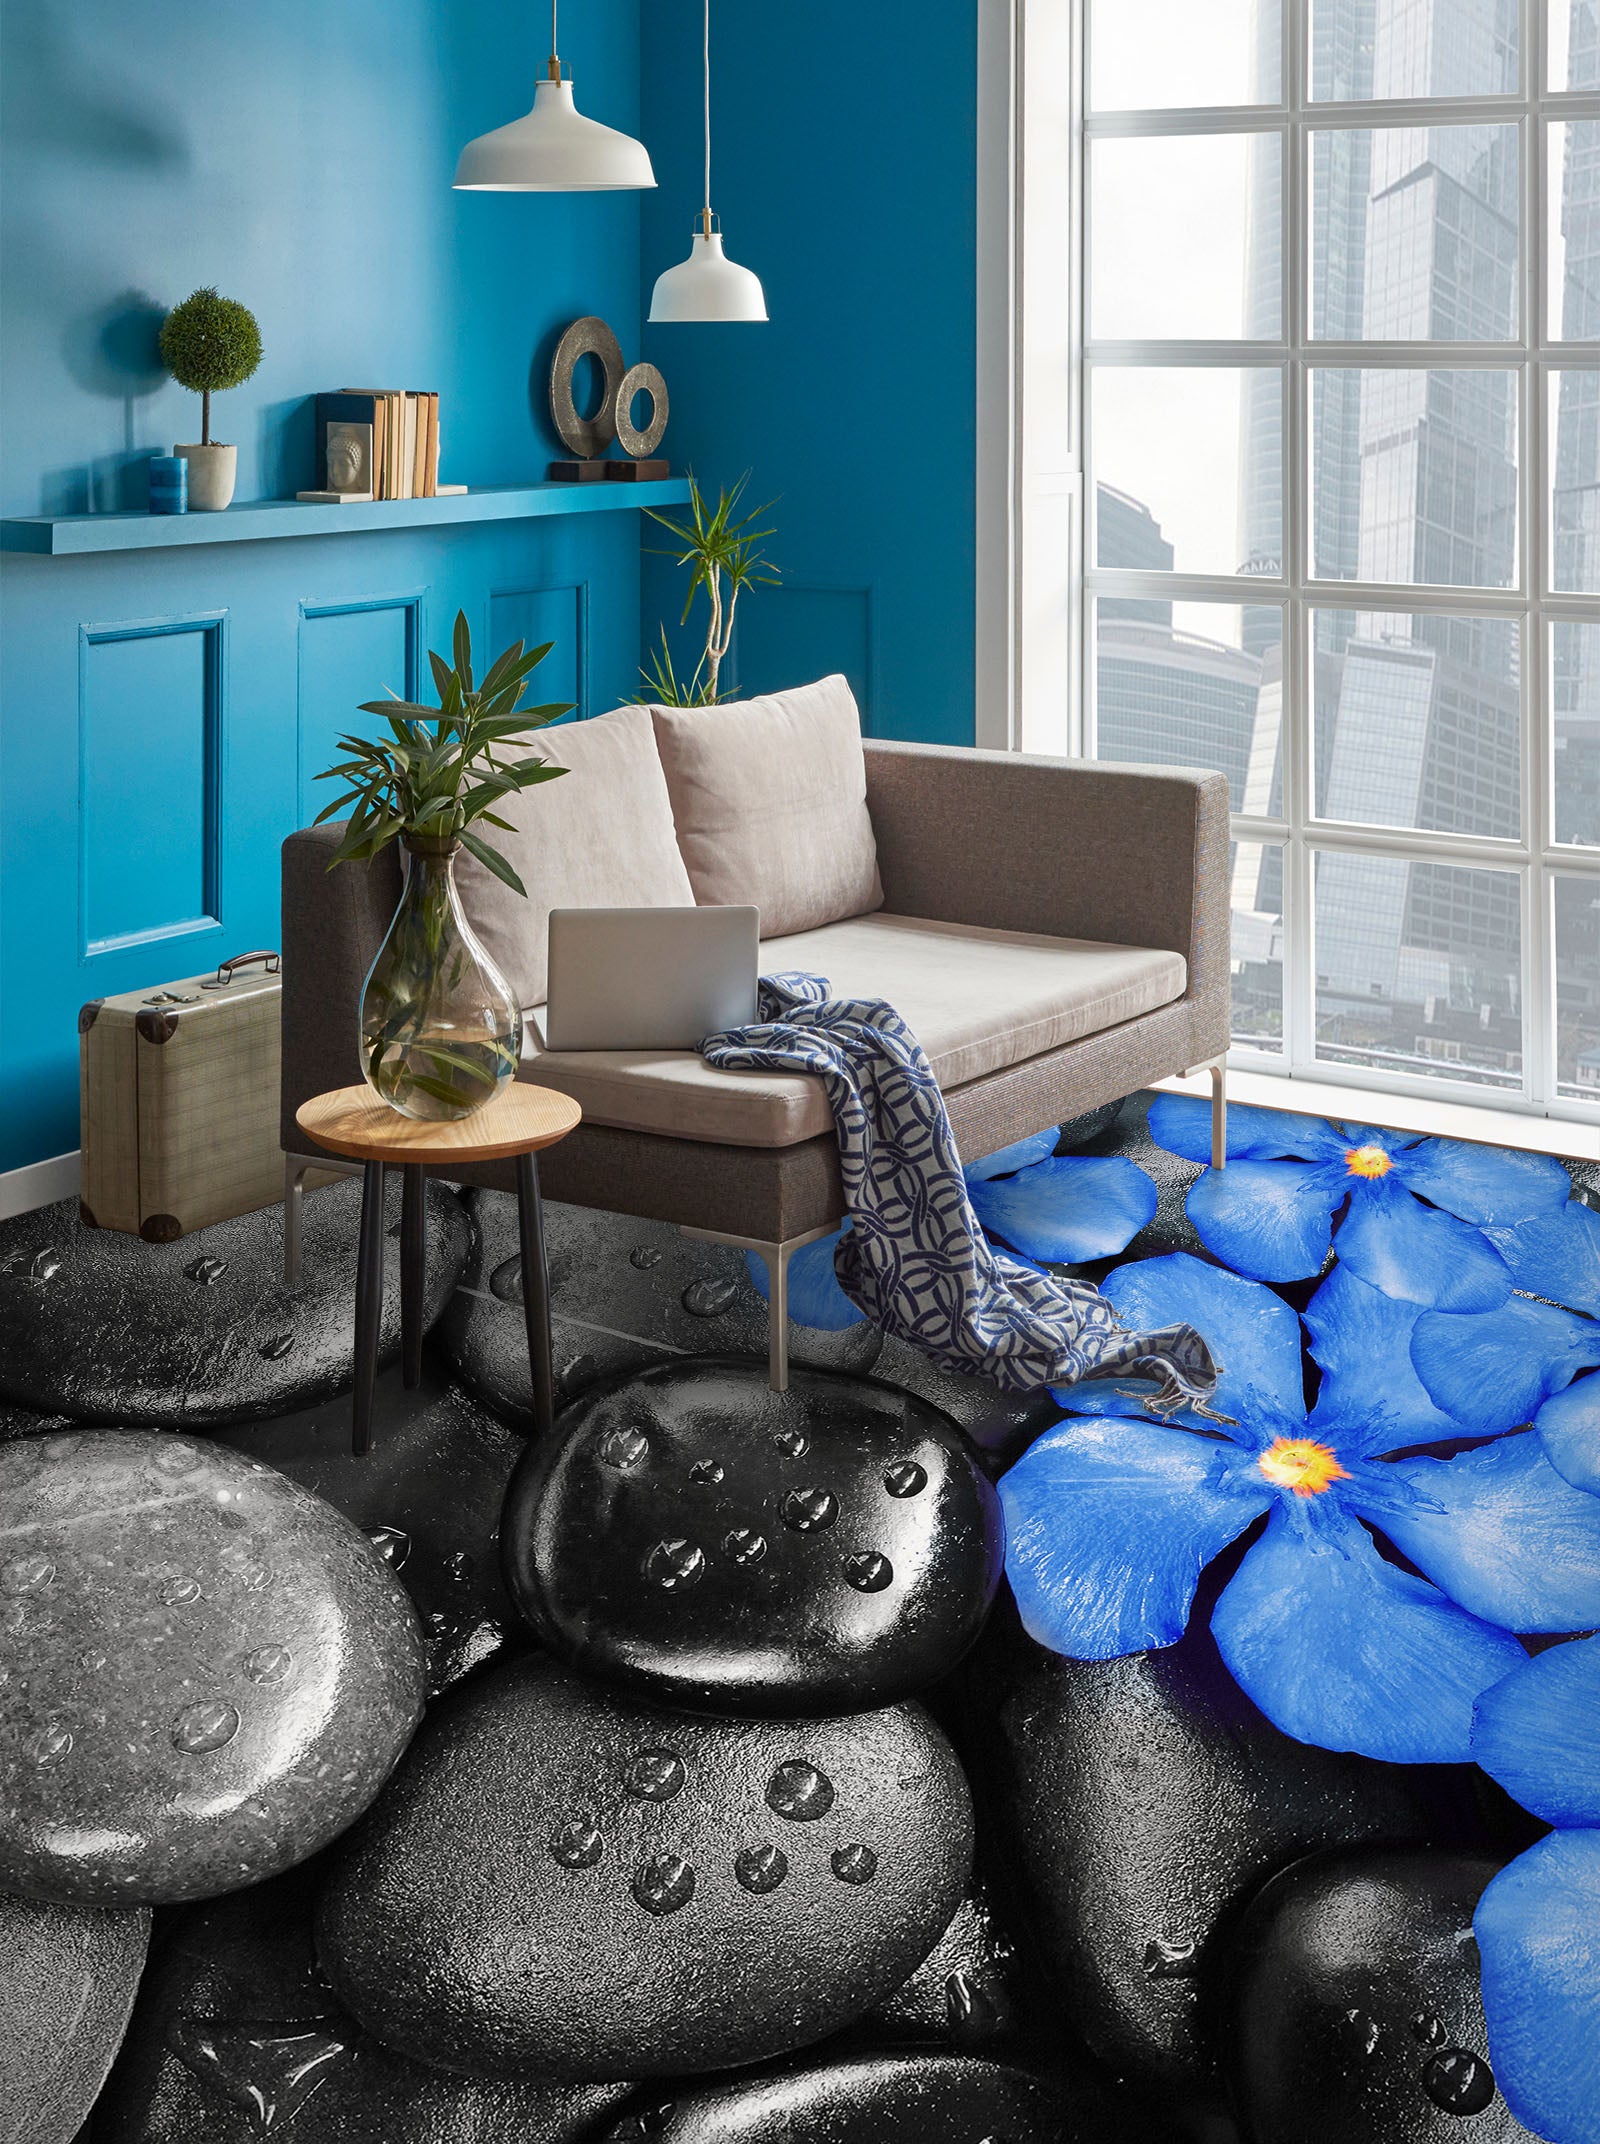 3D Quiet Blue Flowers 1441 Floor Mural  Wallpaper Murals Self-Adhesive Removable Print Epoxy